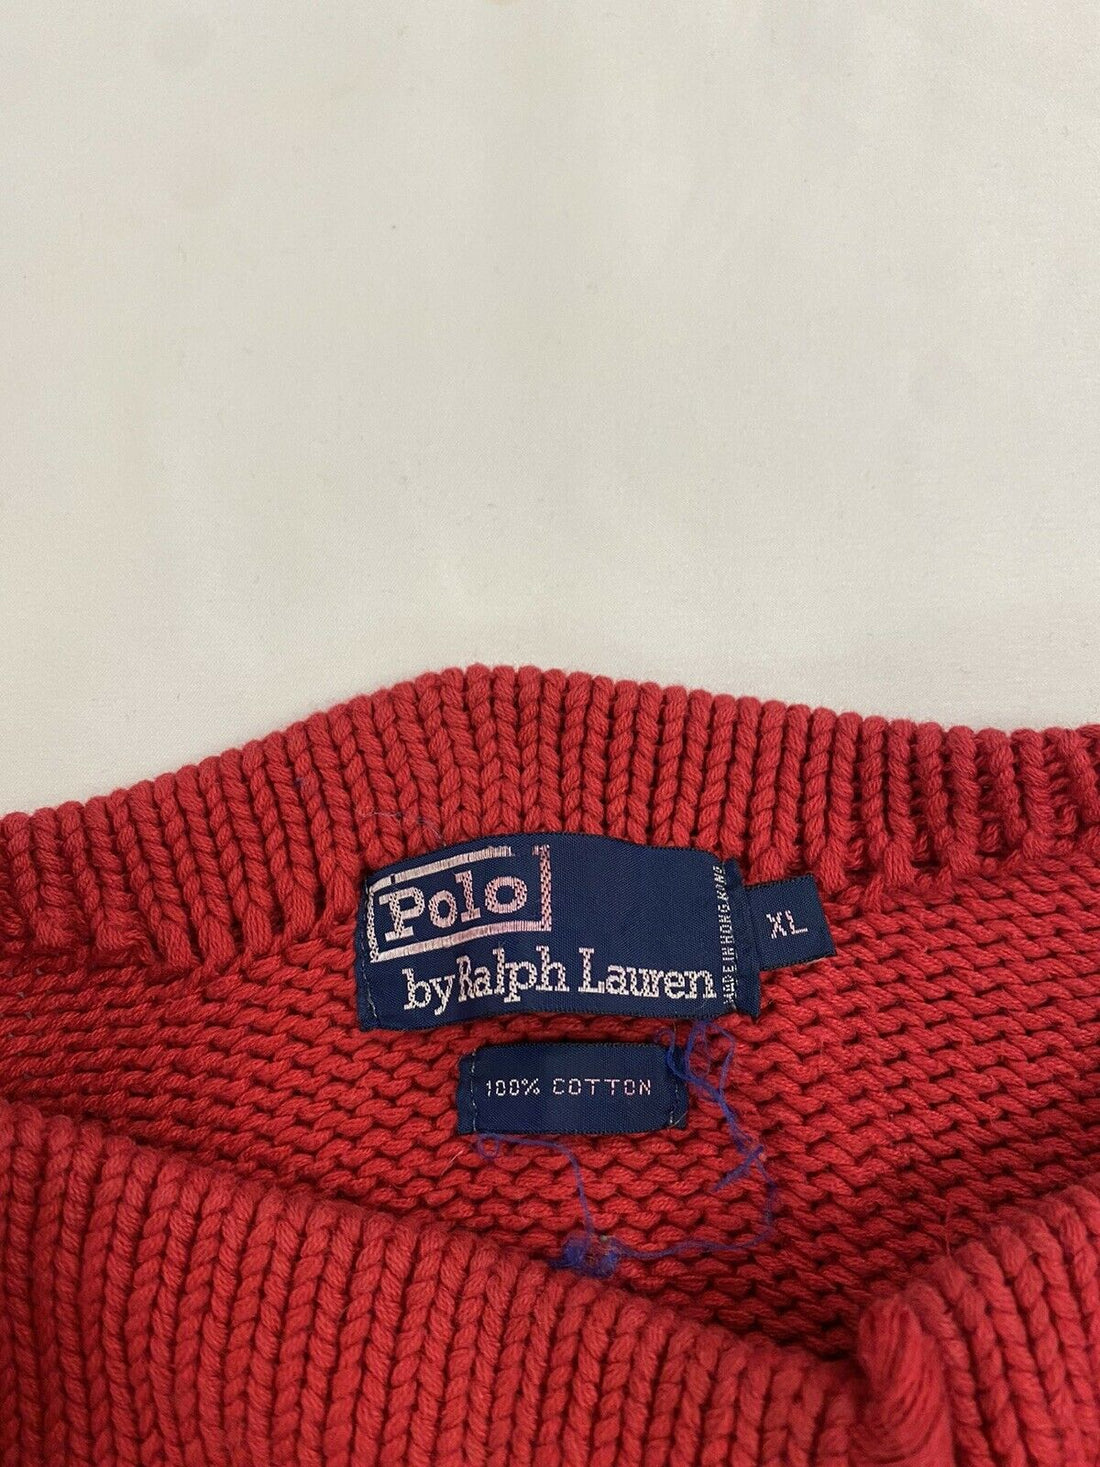 Vintage Polo Ralph Lauren Knit Crewneck Sweater Size XL Red 1987 80s Cross Flag